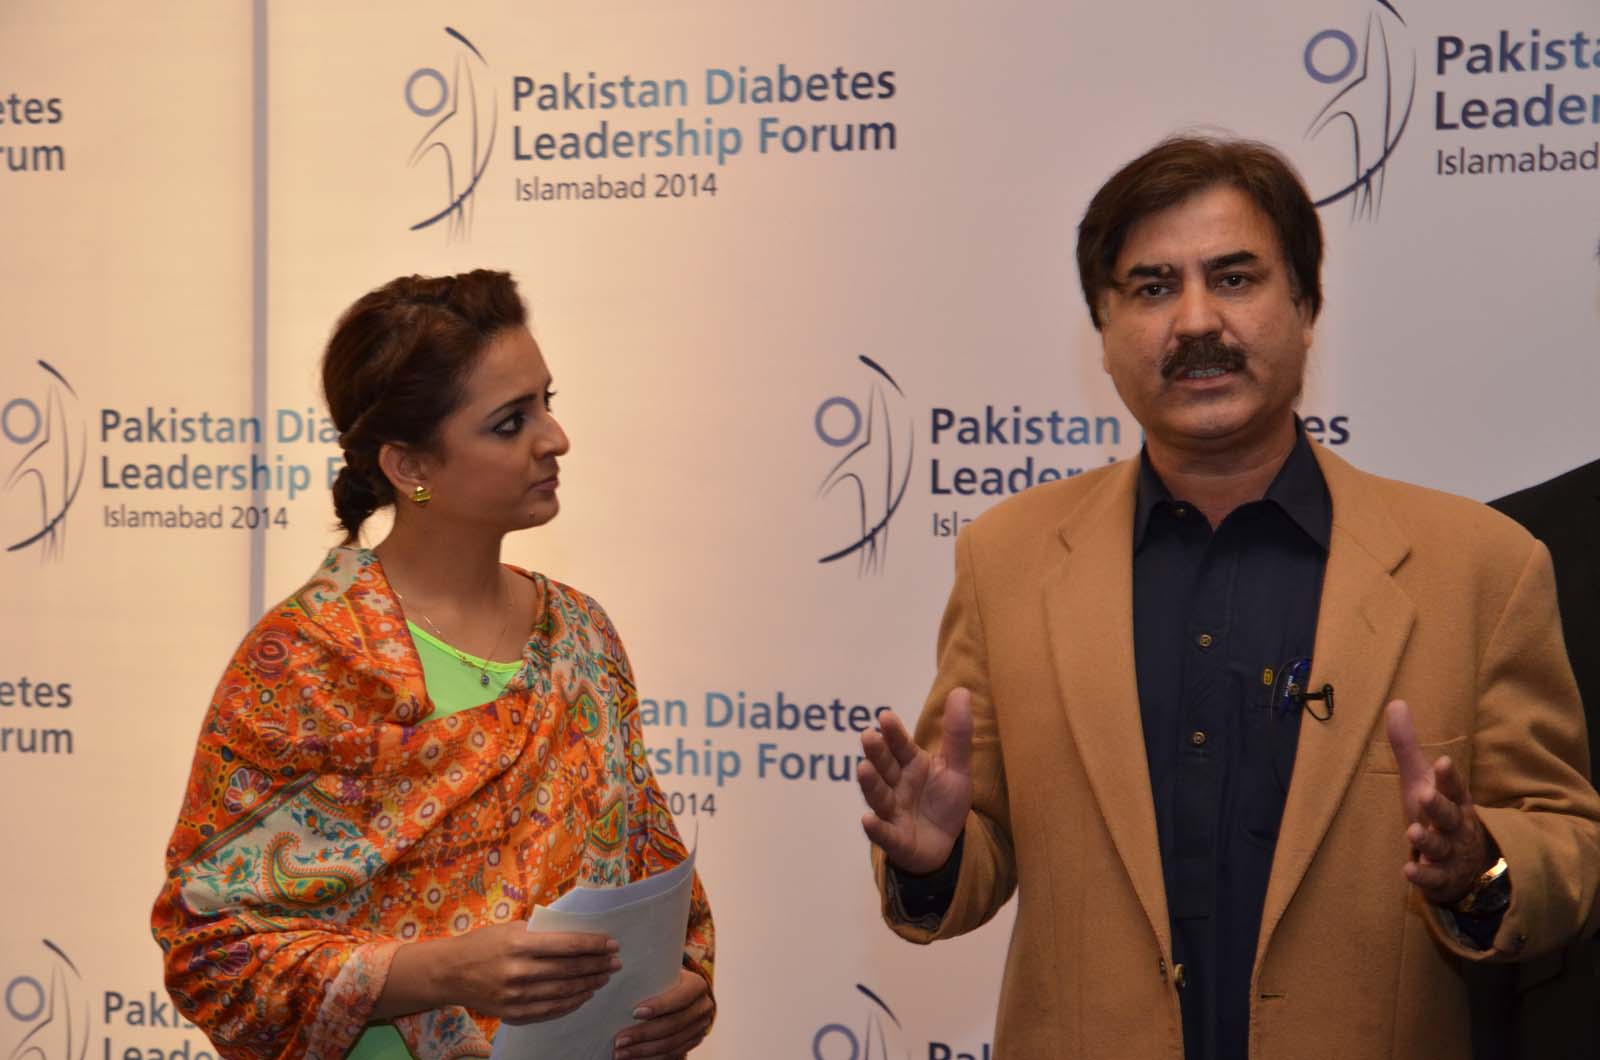 Pakistan Diabetes Leadership Forum, Islamabad 2014